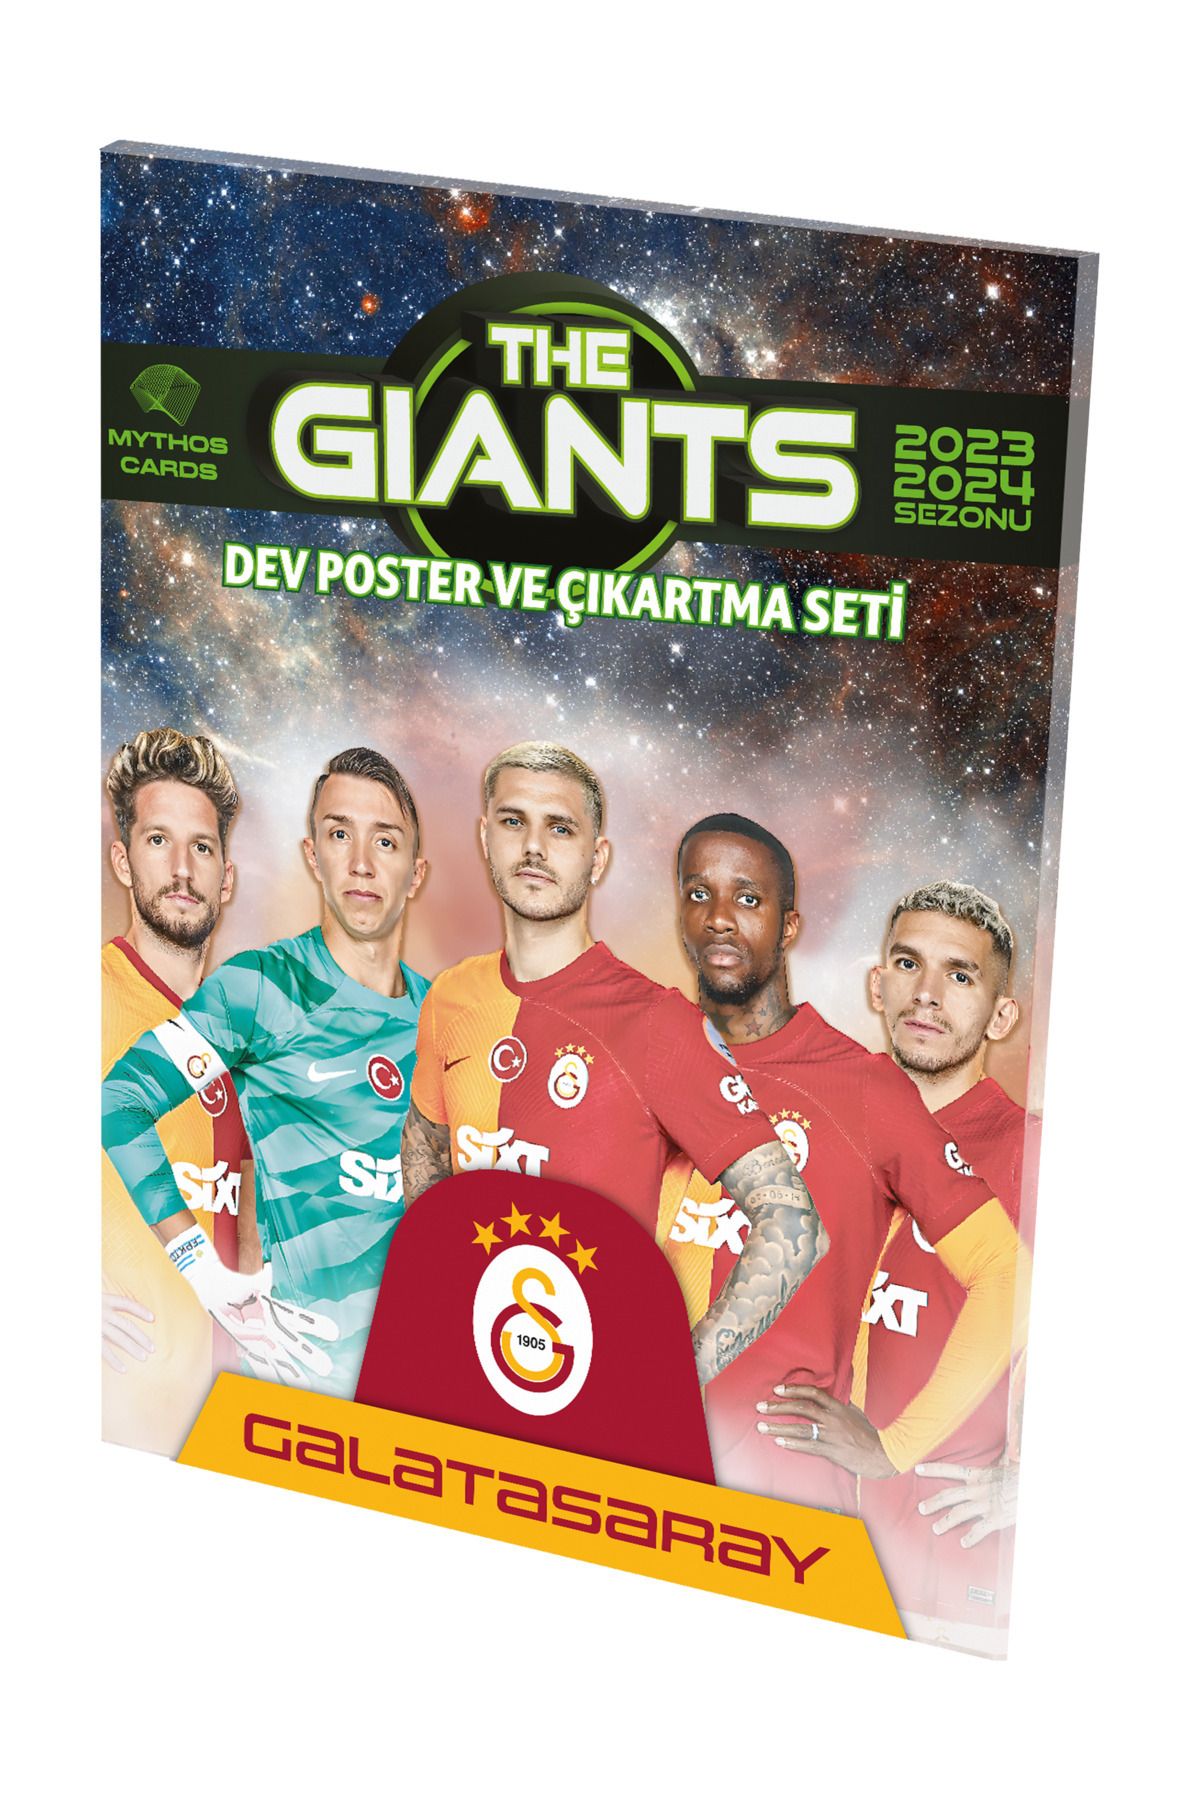 Galatasaray - THE GIANTS DEV POSTER VE ÇIKARTMA SETİ